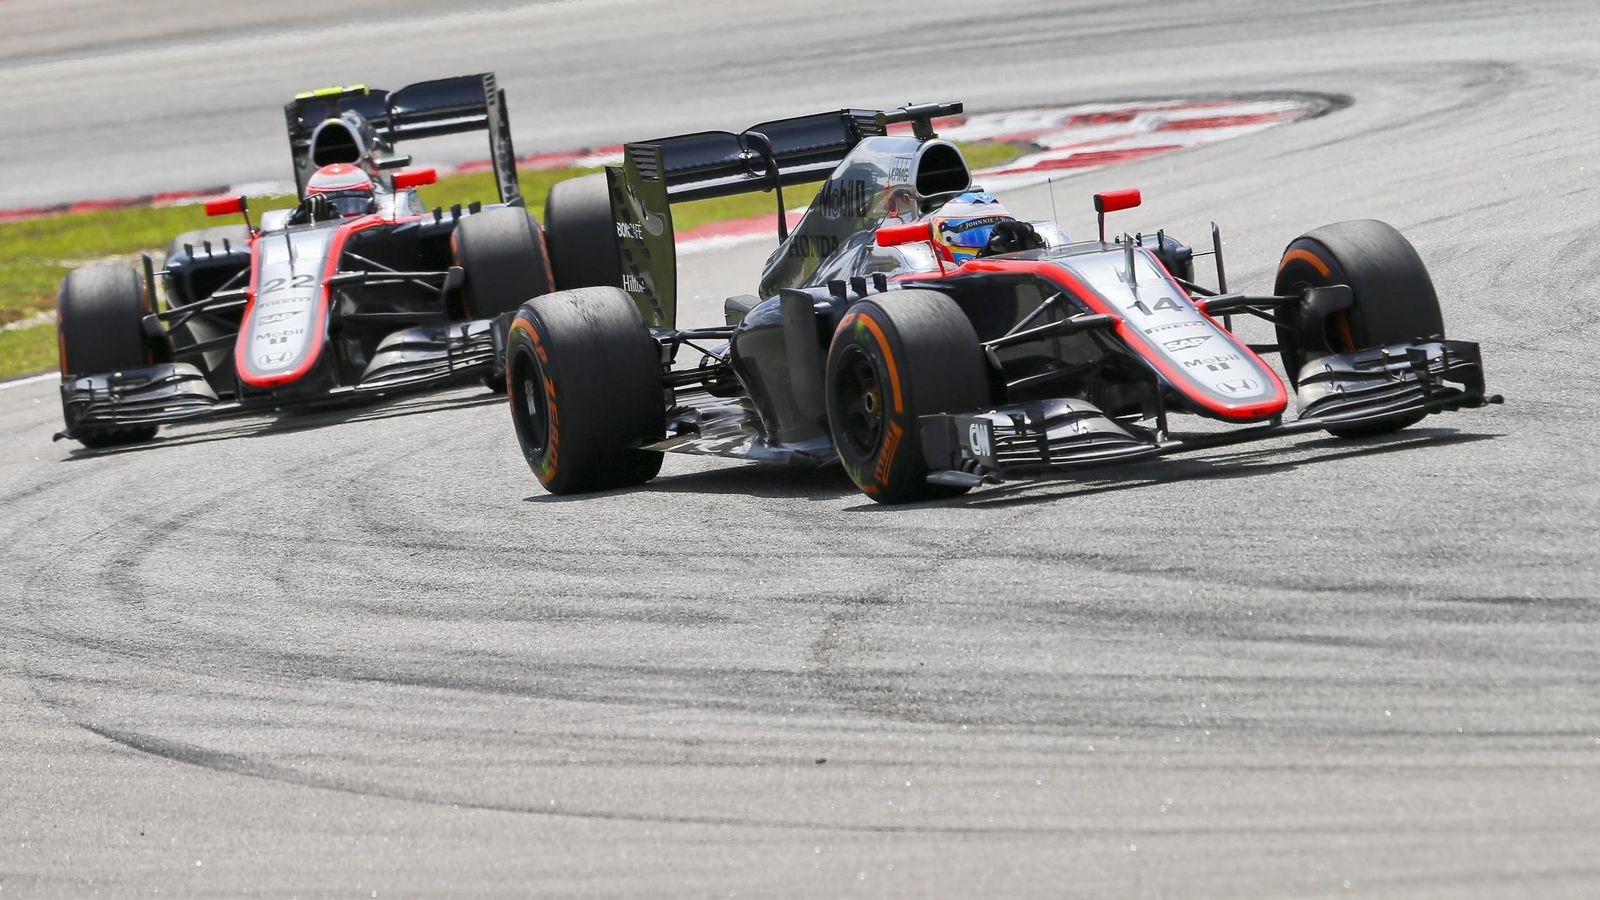 Foto: Fernando Alonso y Jenson Button en la pista de Sepang.